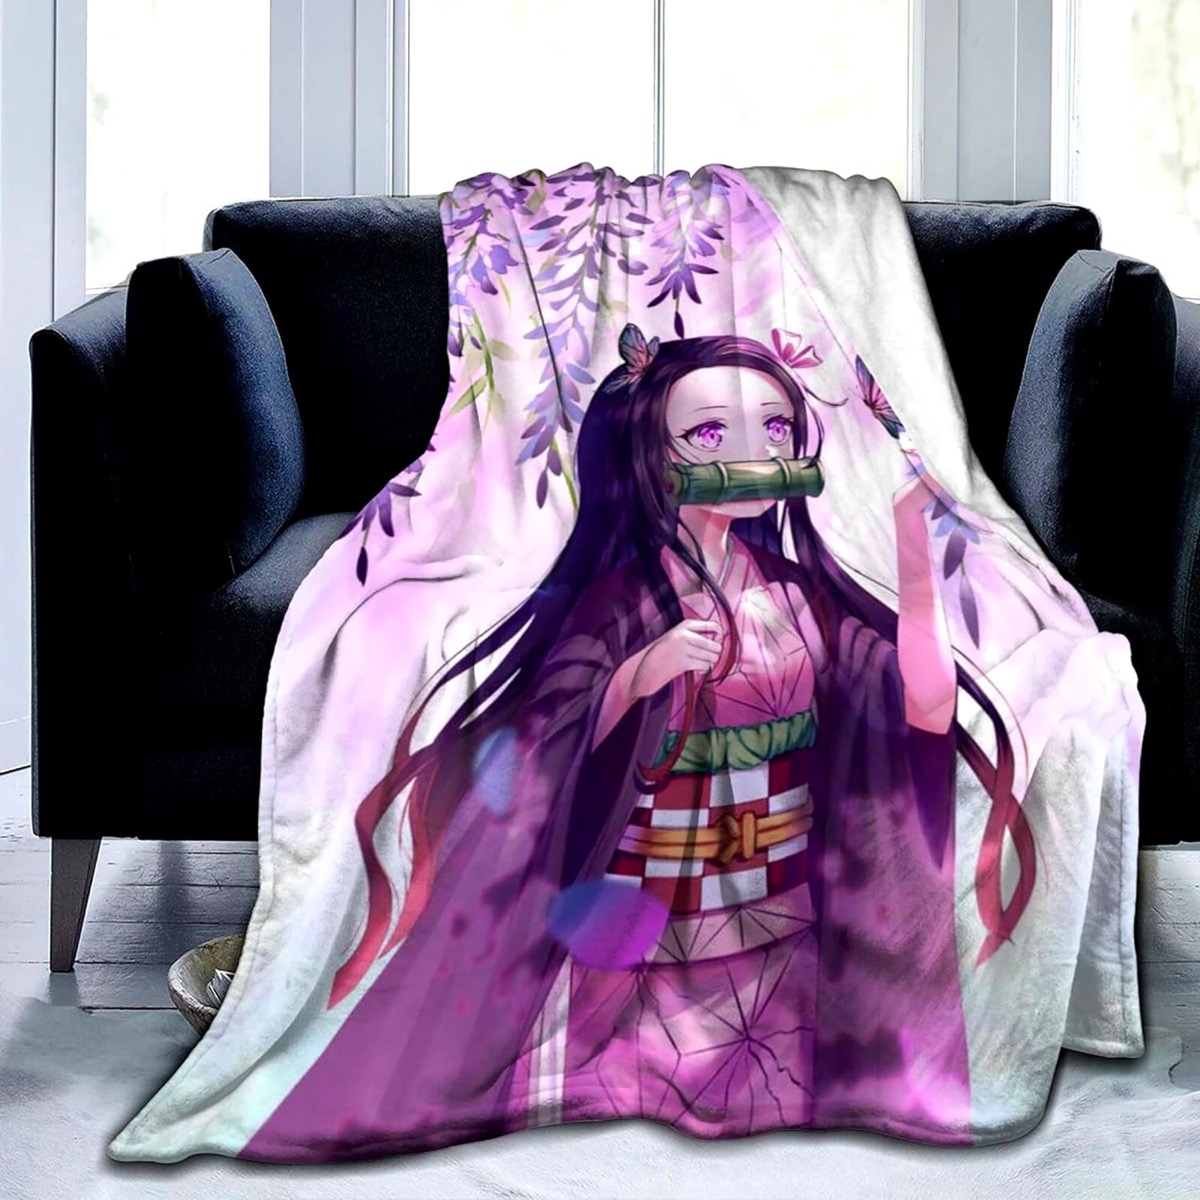 a throw blanket featuring Nezuko from "Demon Slayer" 